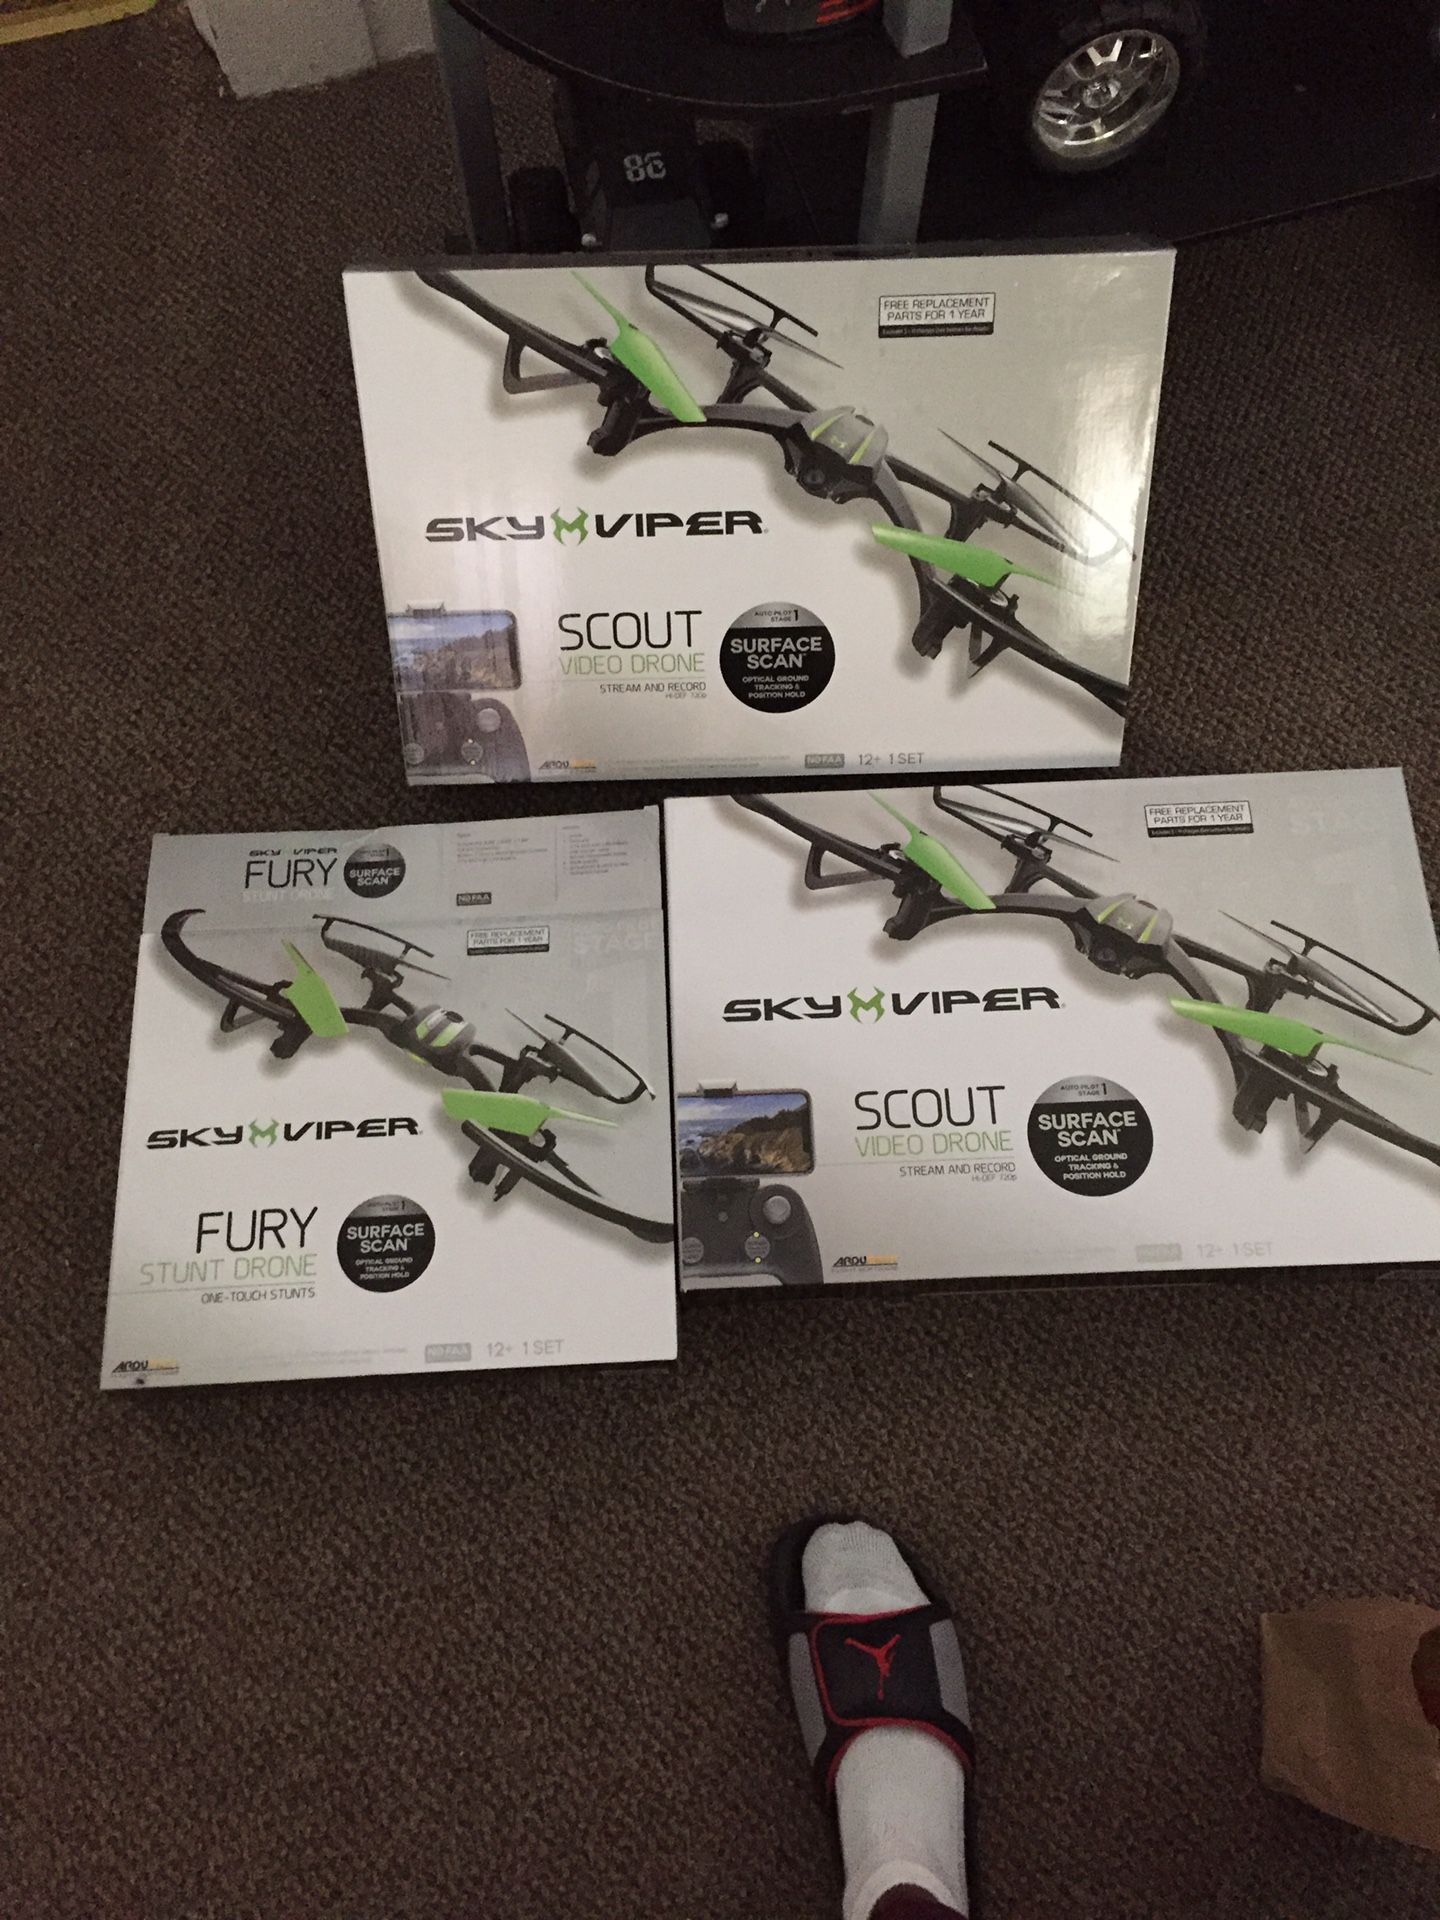 Sky Viper (Scout) video drone